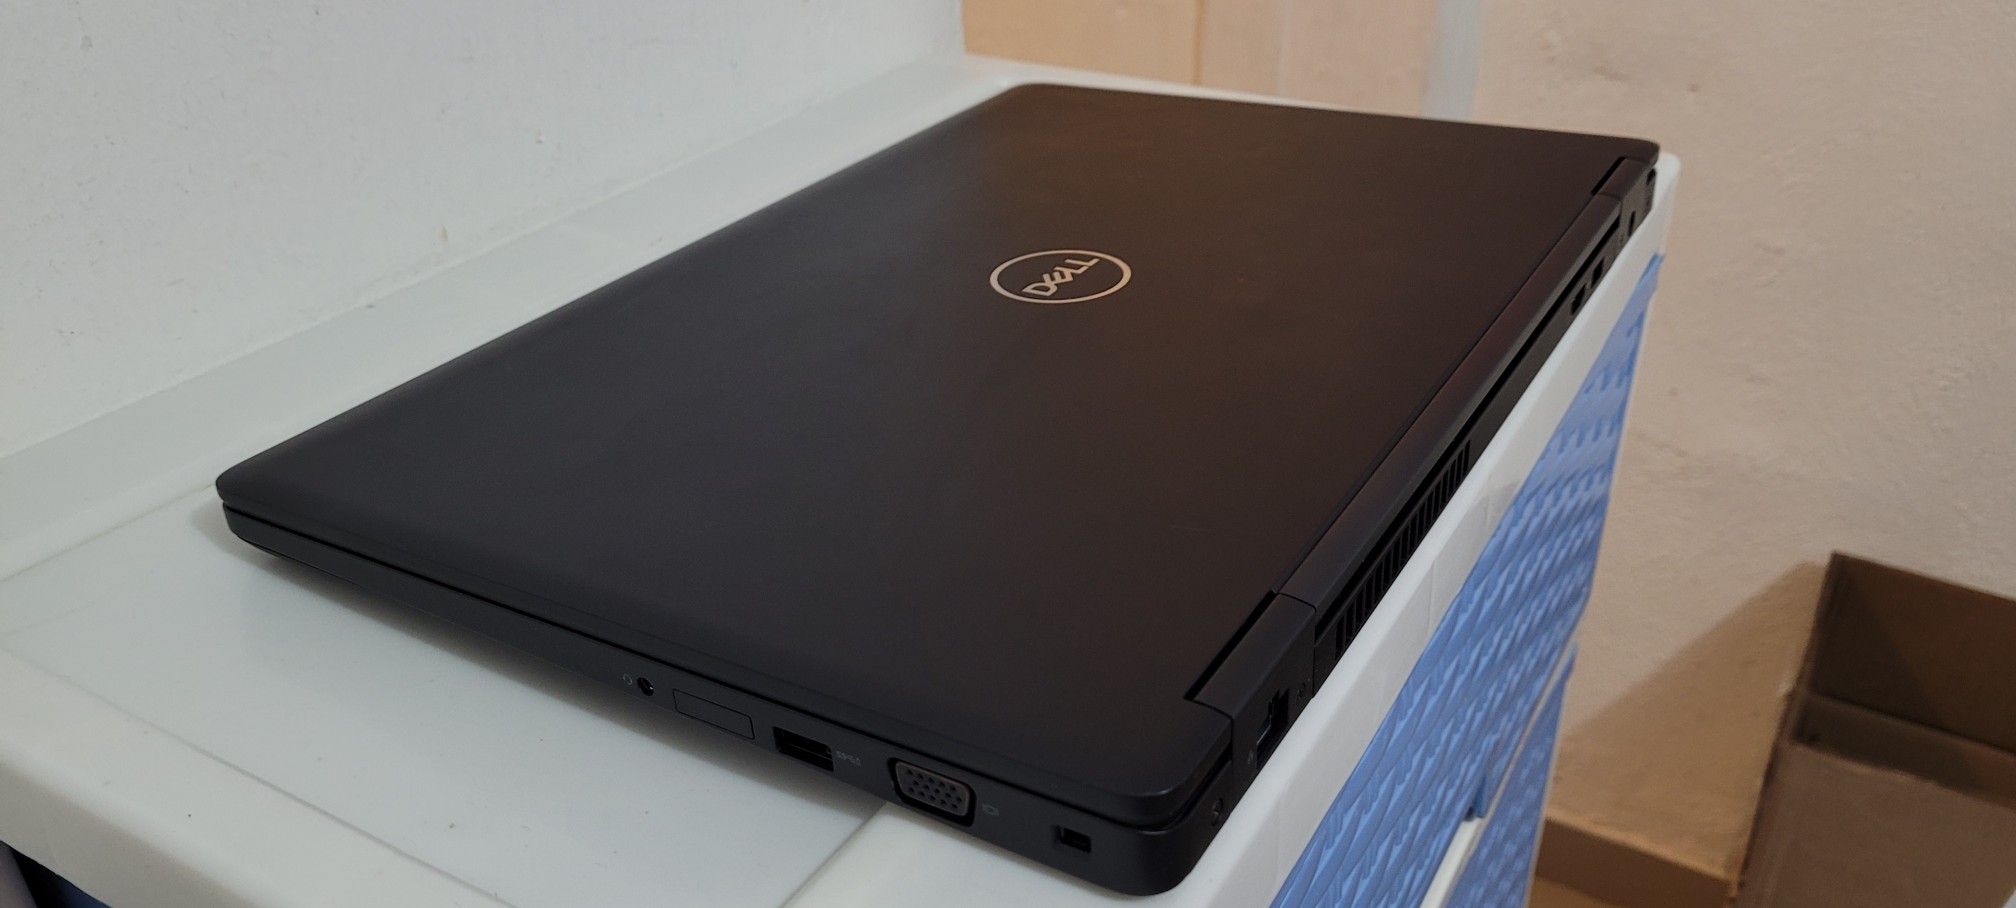 computadoras y laptops - Laptop Dell 5590 17 Pulg Core i5 8va Gen Ram 8gb ddr4 Disco m2 1000gb SSD Solido 2